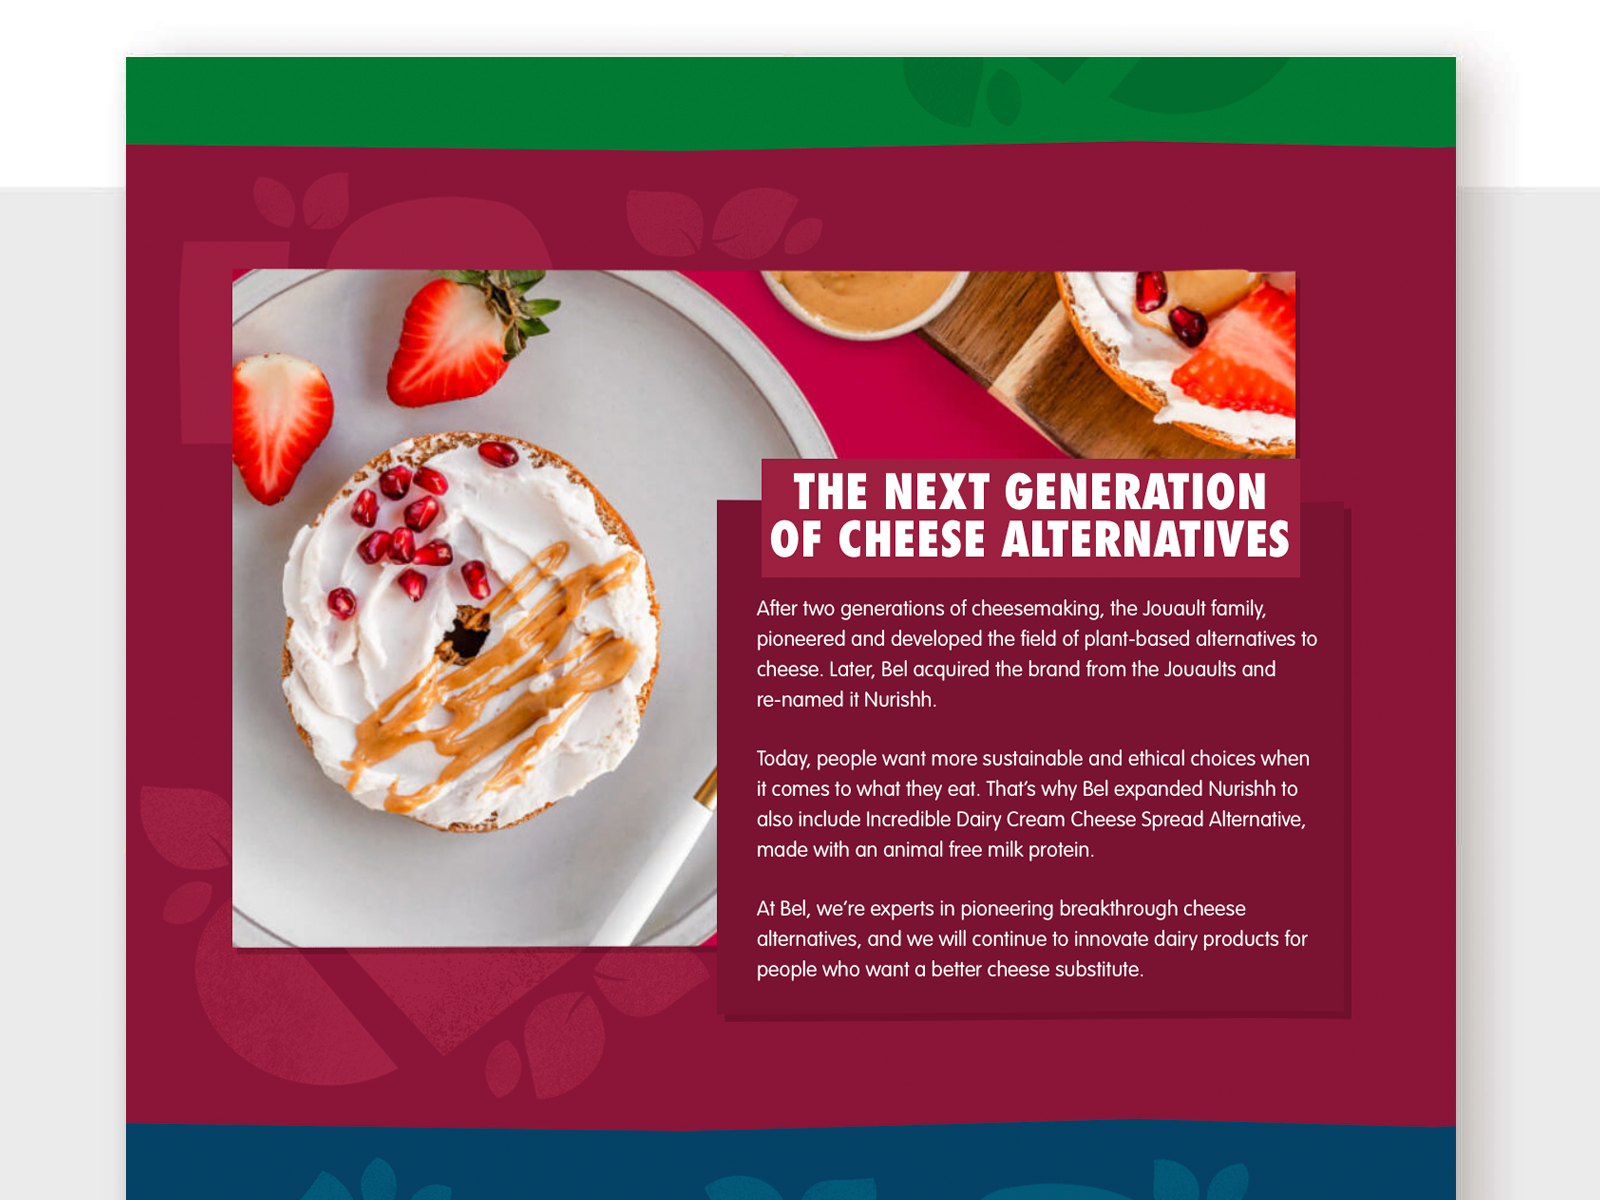 Next Generation of Cheese Alternatives